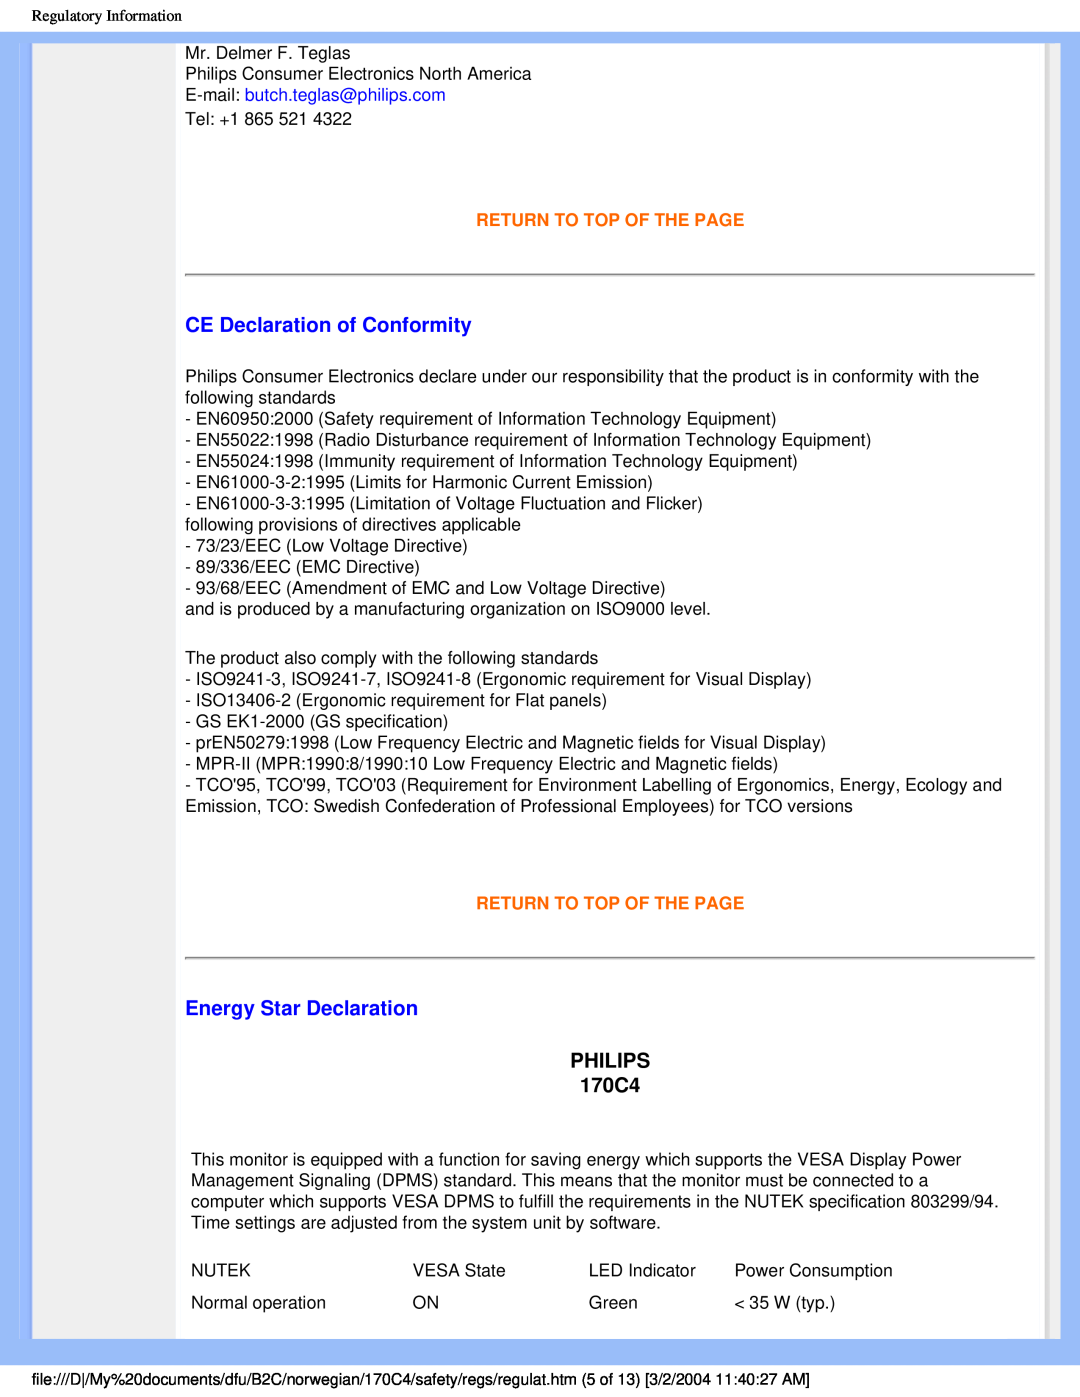 Philips CE Declaration of Conformity, Energy Star Declaration, PHILIPS 170C4, E-mail butch.teglas@philips.com 